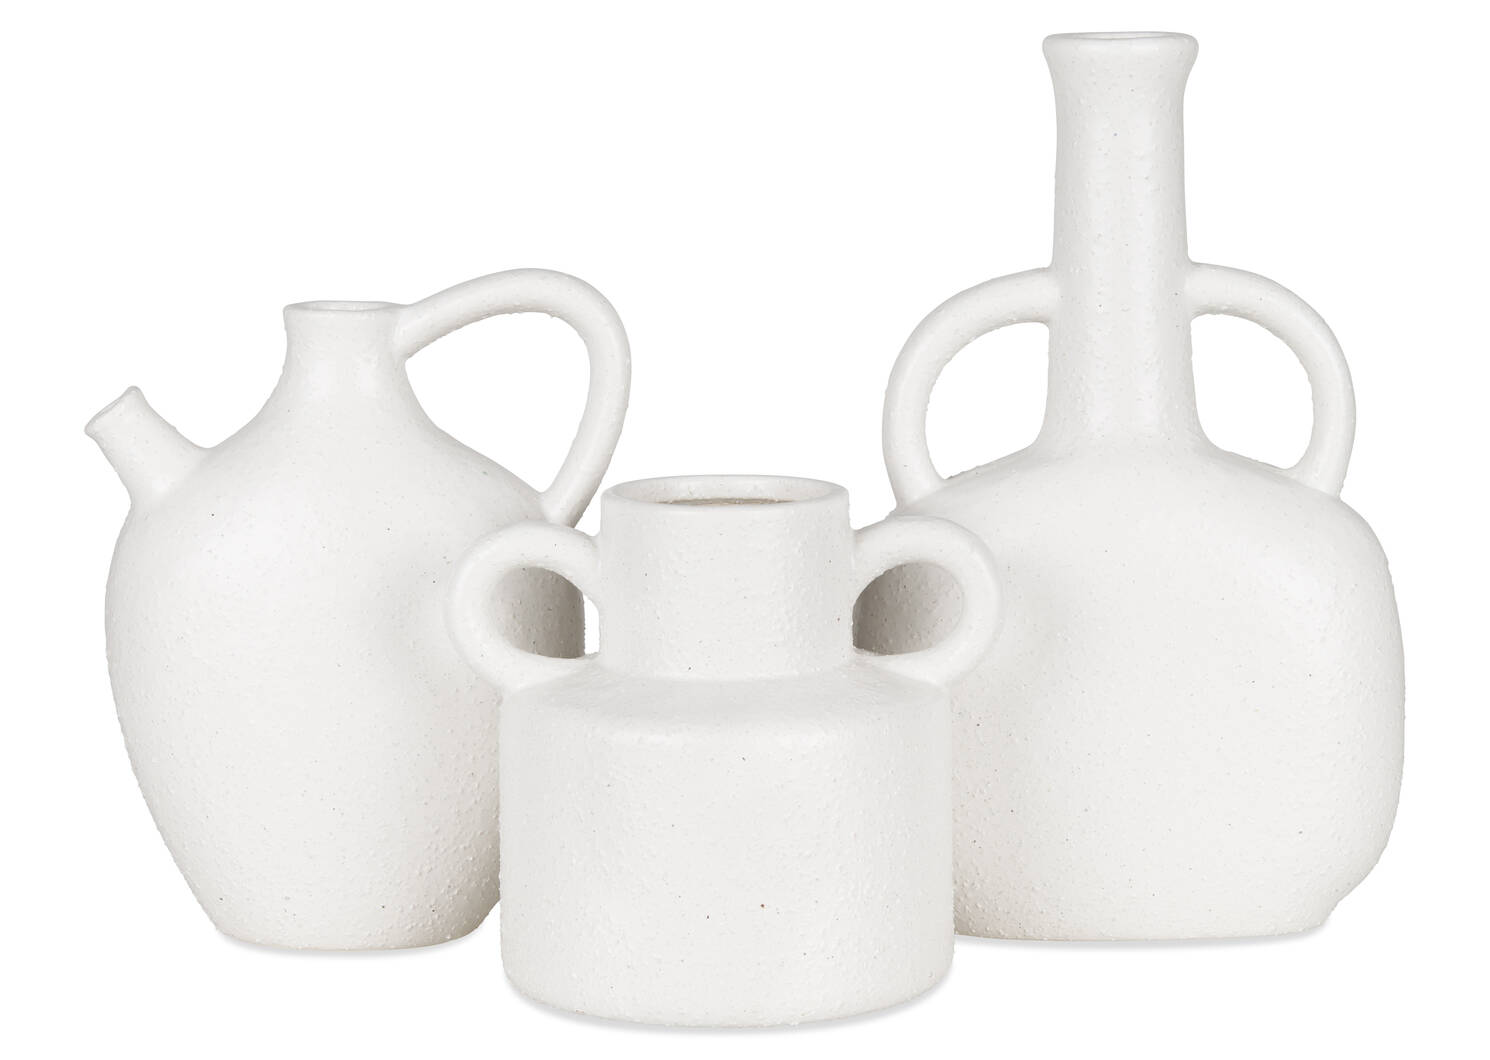 Meara Vase Medium White